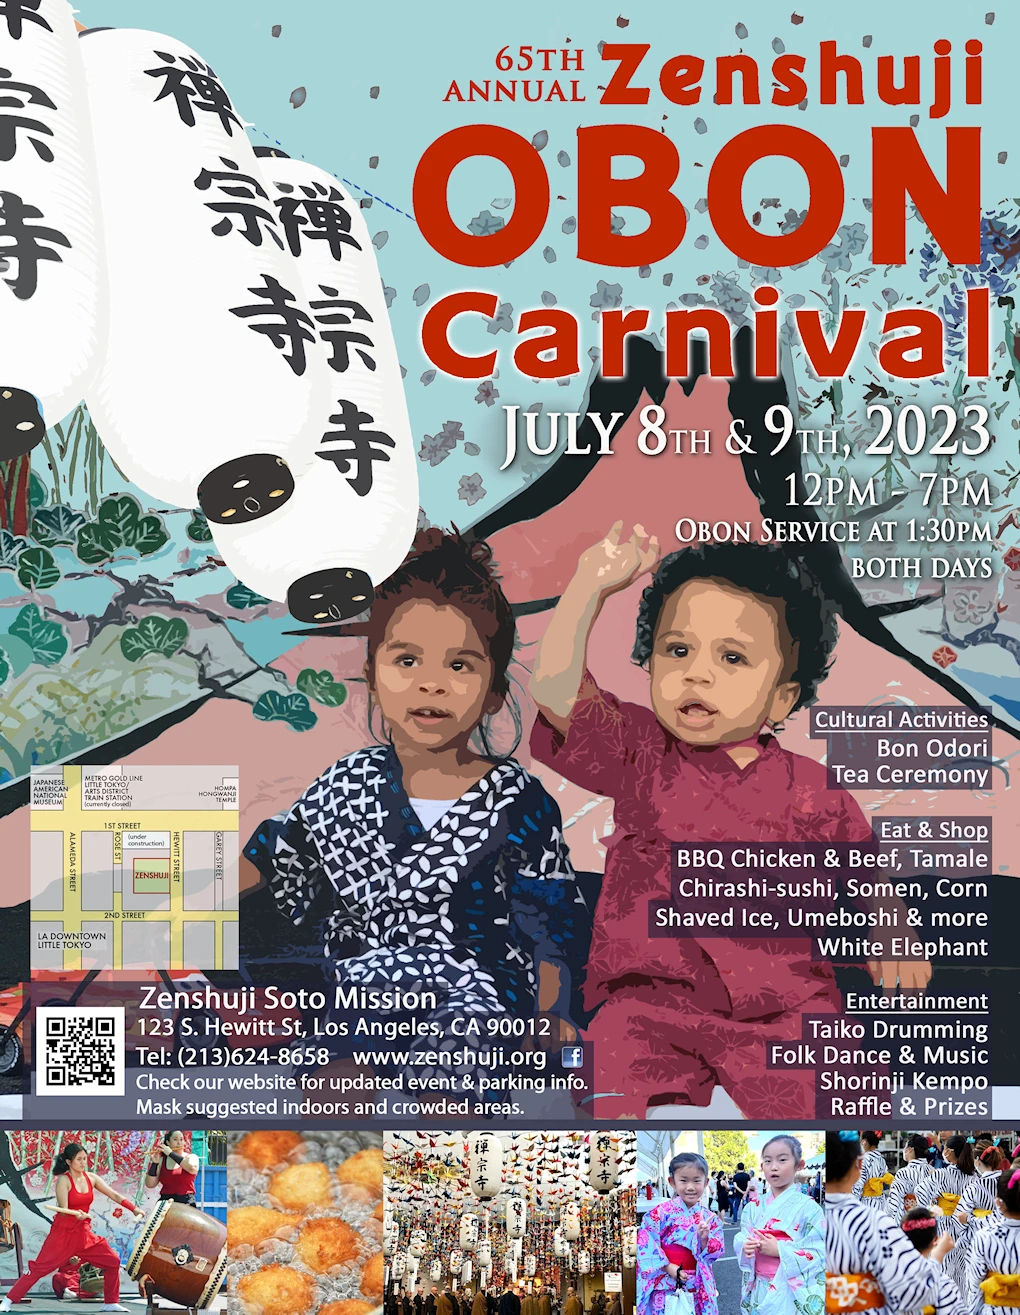 2022 - Zenshuji Soto Mission Annual Summer Obon Matsuri Festival Event - Los Angeles (2 Days) Japanese Food, Taiko, Performances, Games.. [Video]